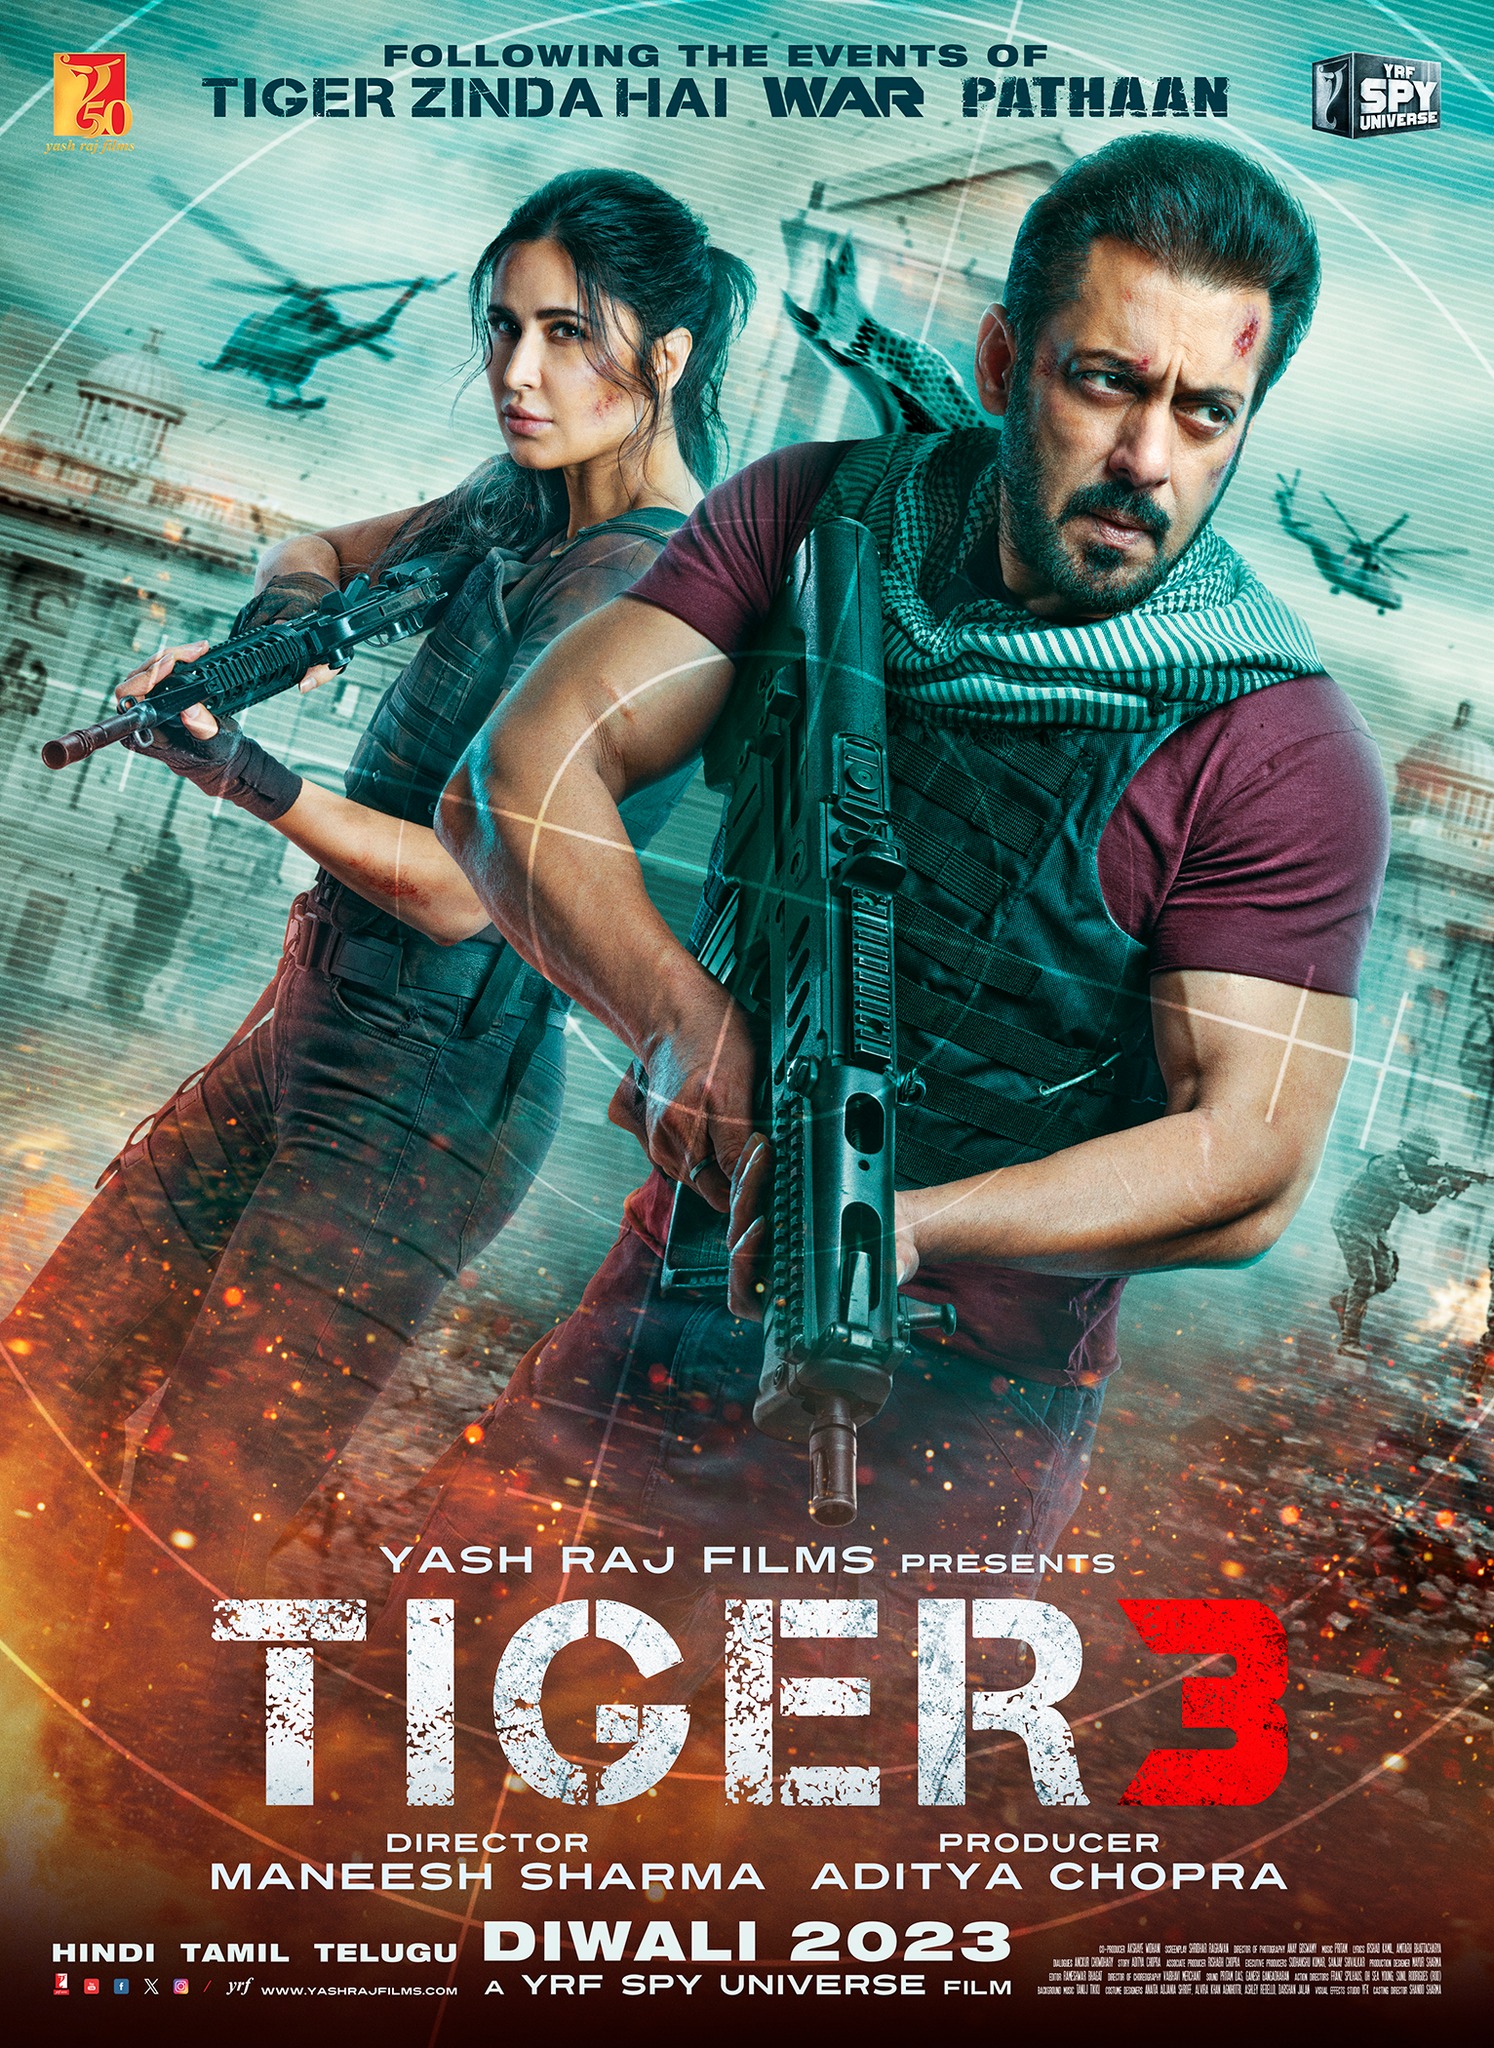 Tiger 3 FIRST Poster Out: Salman Khan-Katrina Kaif Go All Guns Blazing, Confirm Release Date